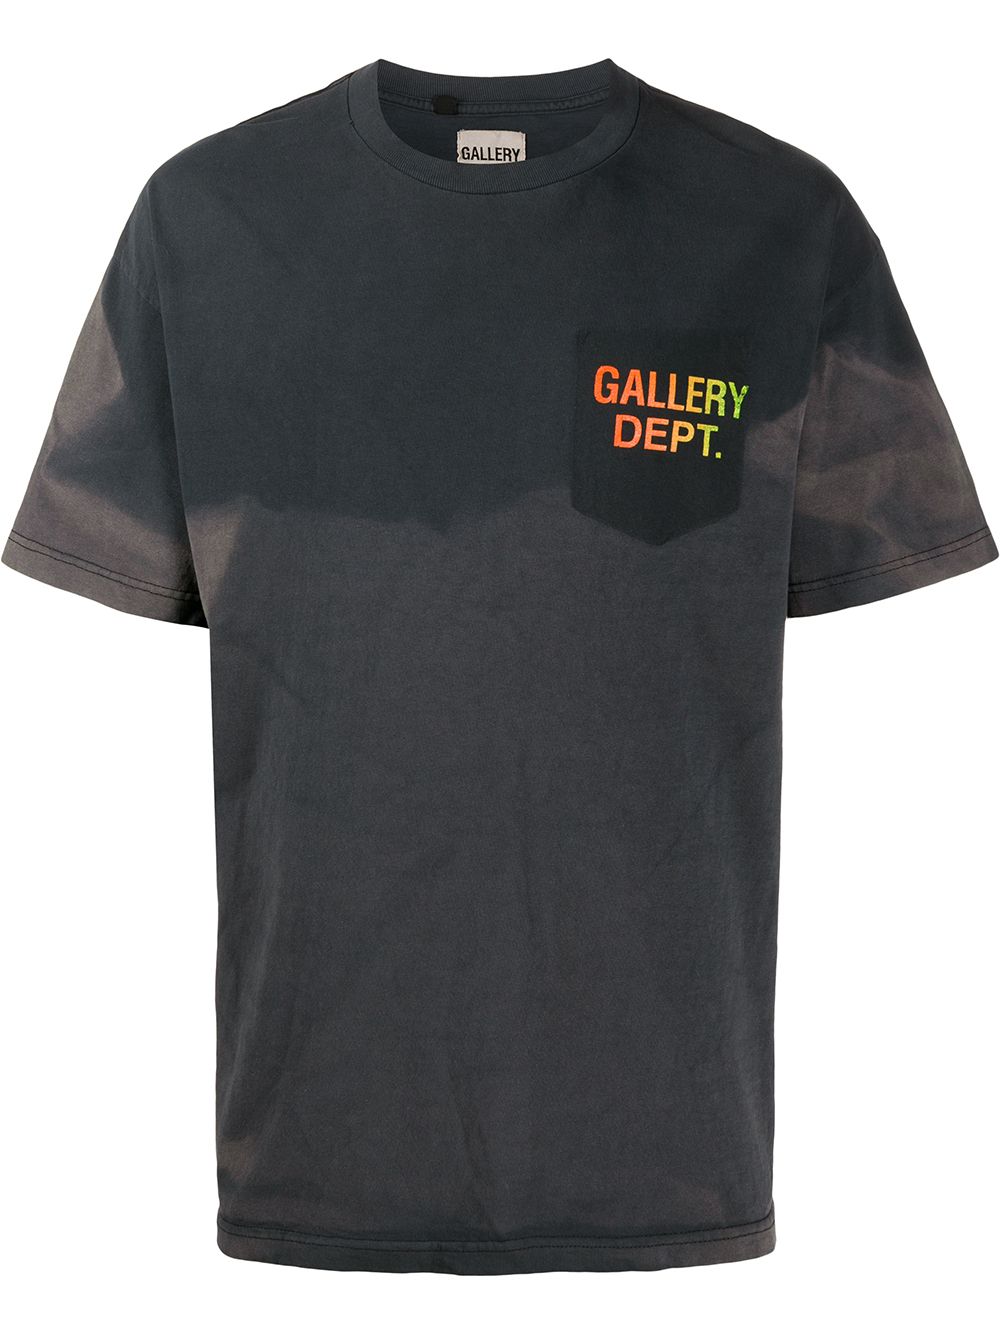 фото Gallery dept. crew-neck logo t-shirt